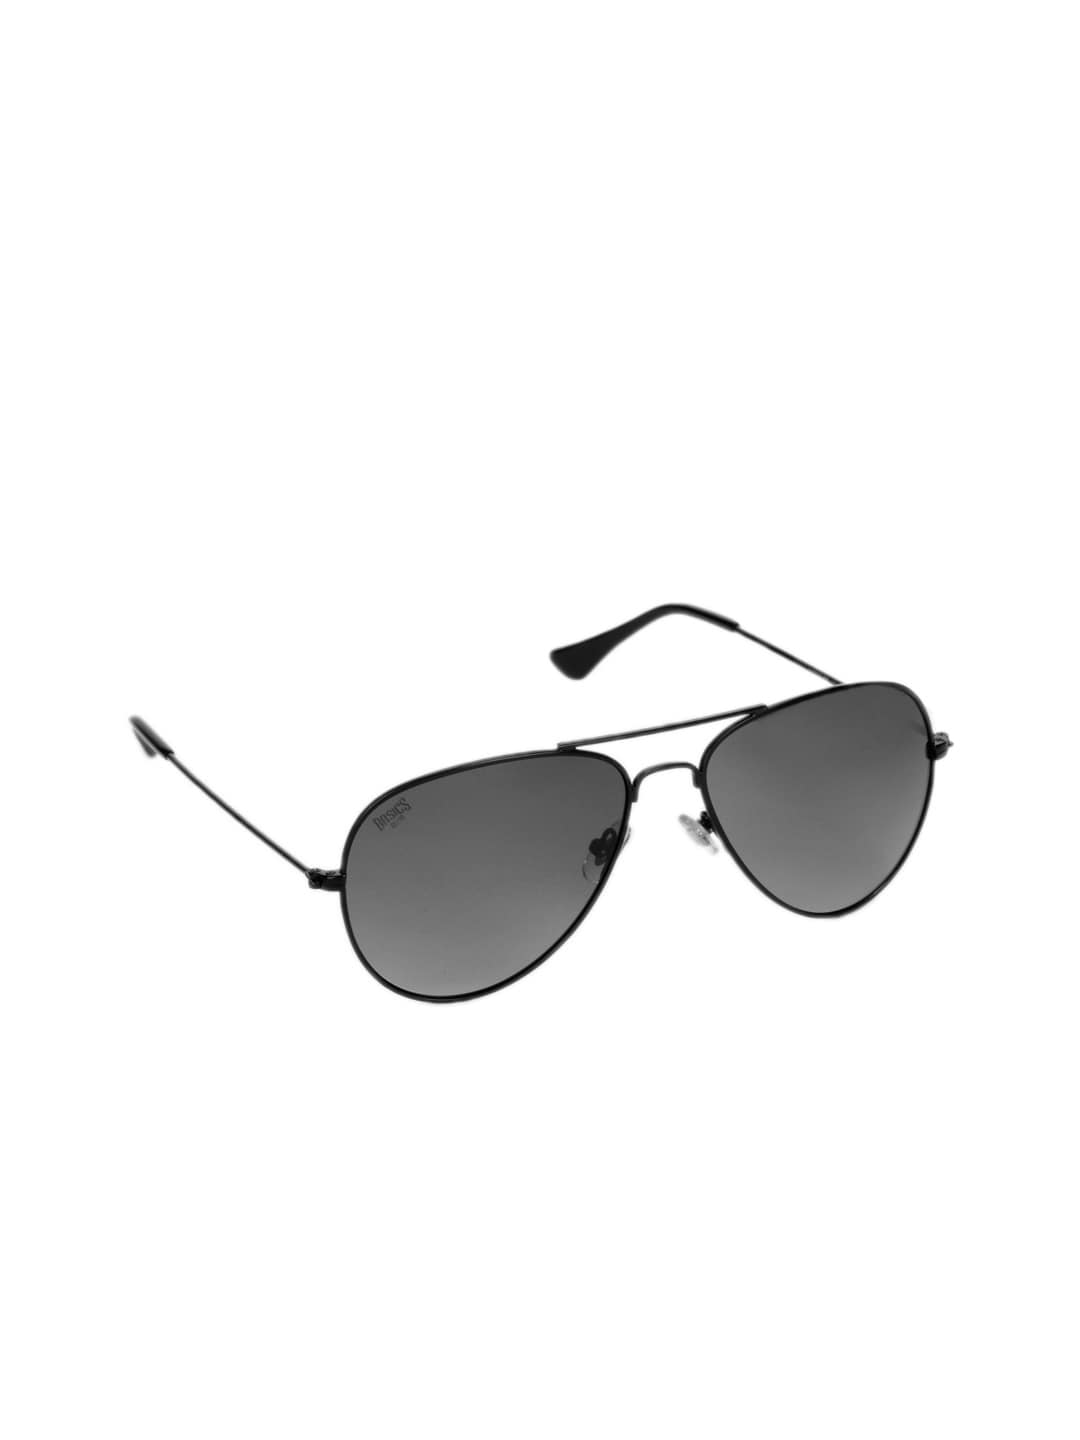 Basics Men Aviator Sunglasses